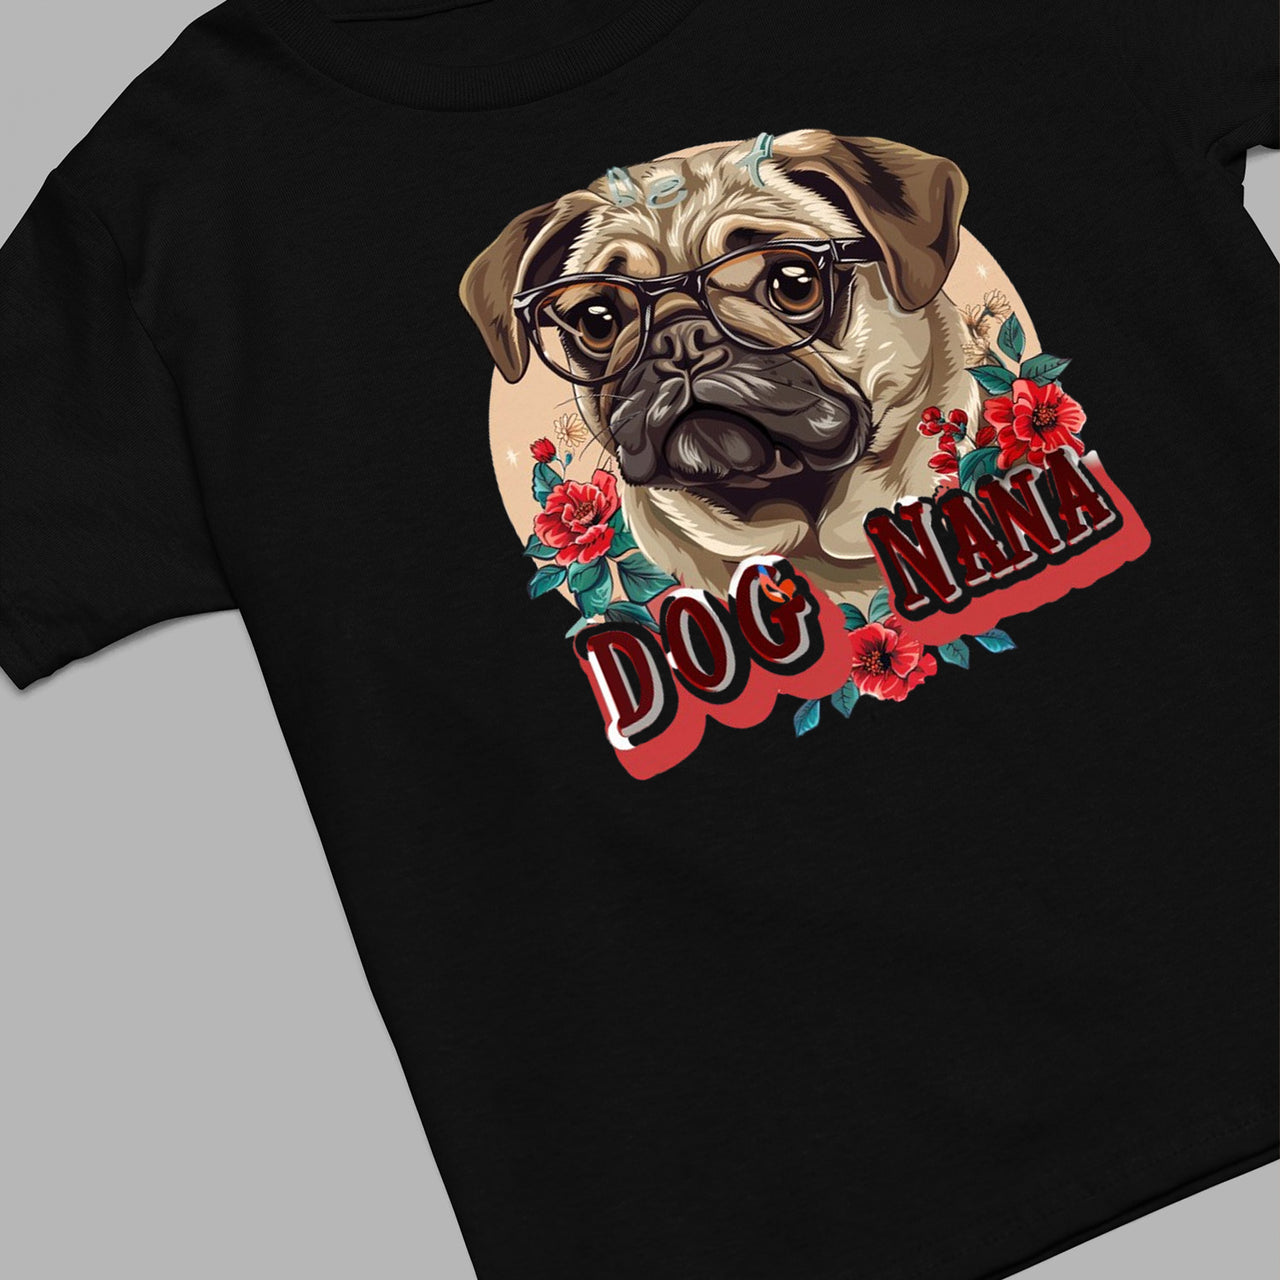 Pug Dog T-shirt, Pet Lover Shirt, Dog Lover Shirt, Dog Nana  T-Shirt, Dog Owner Shirt, Gift For Dog Grandma, Funny Dog Shirts, Women Dog T-Shirt, Mother's Day Gift, Dog Lover Wife Gifts, Dog Shirt